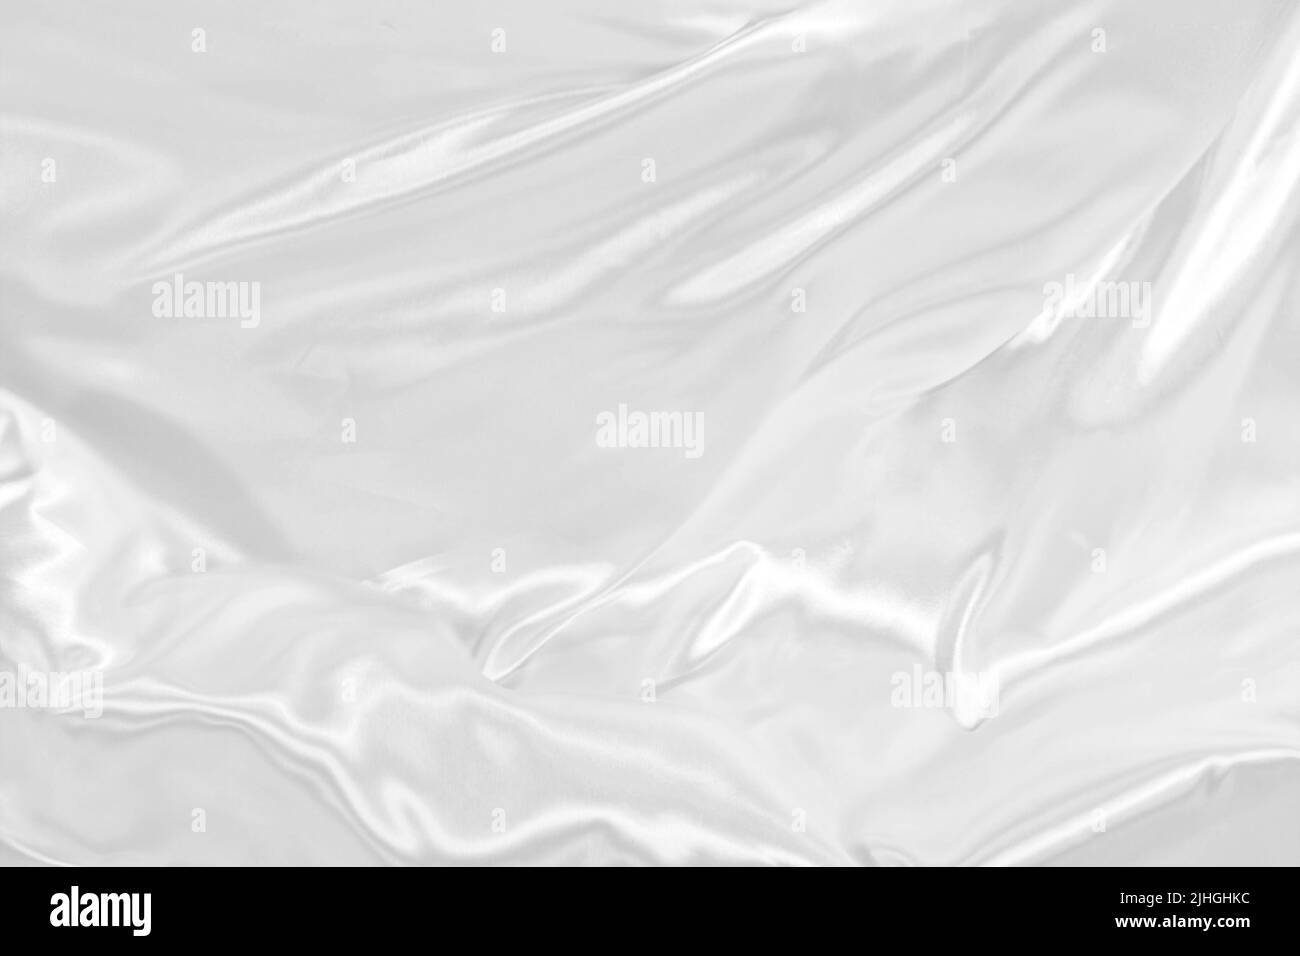 white silk or satin luxury cloth texture background can use as wedding backdrop elegant wallpaper design Stock Photo